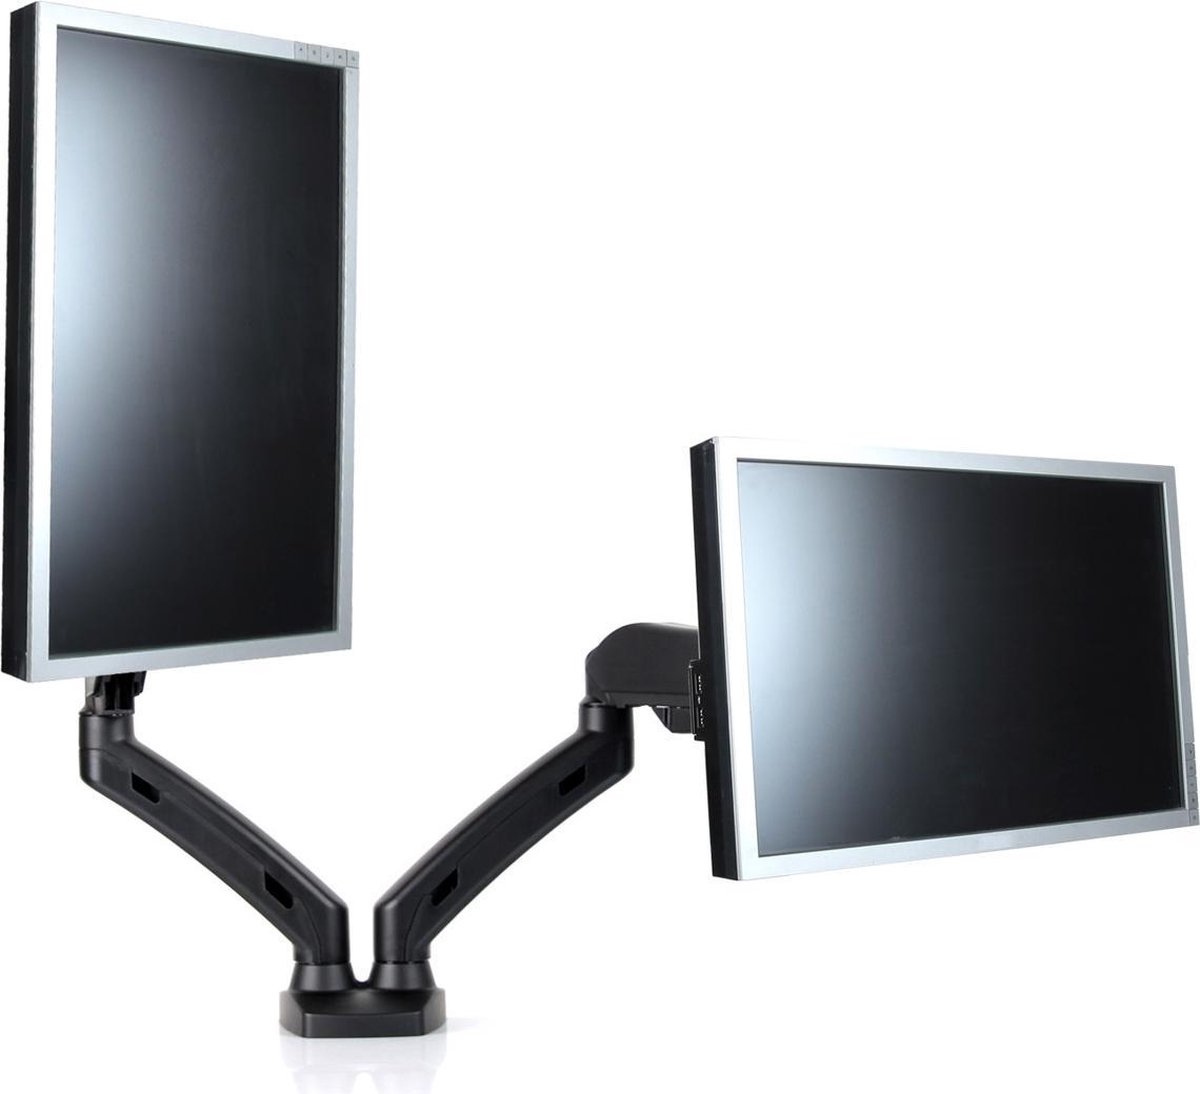 Monitorbeugel 2 schermen 13 tot 27 inch - Standaard L-13GD - Klem